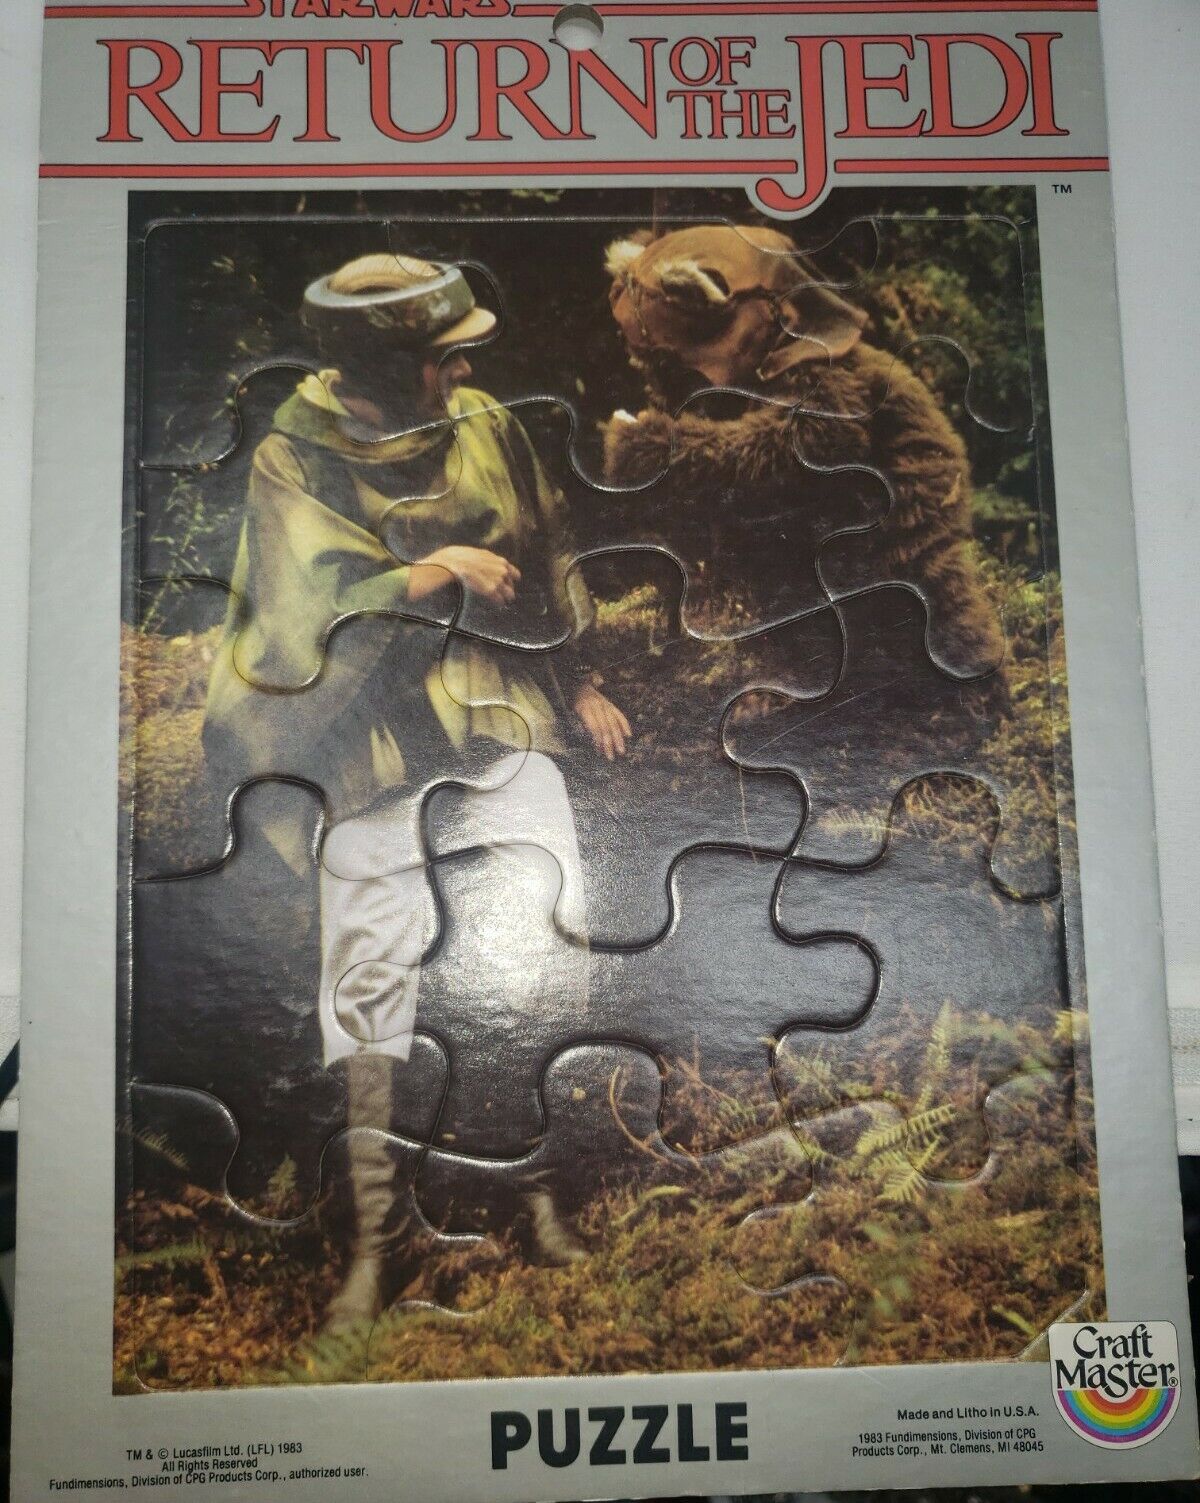 Star Wars Return Of The Jedi Puzzle 15 Piece Craft Master 1983 No 33890 Complete